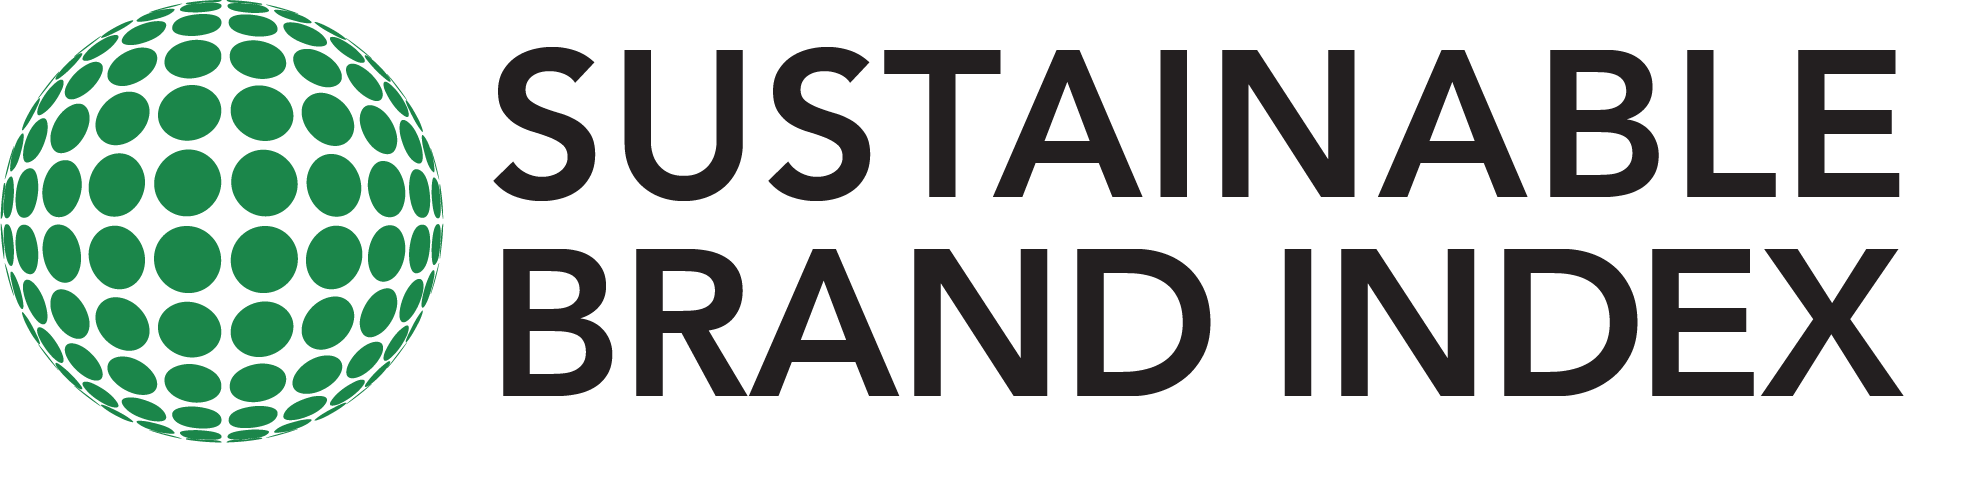 Sustainable Brand Index-logo